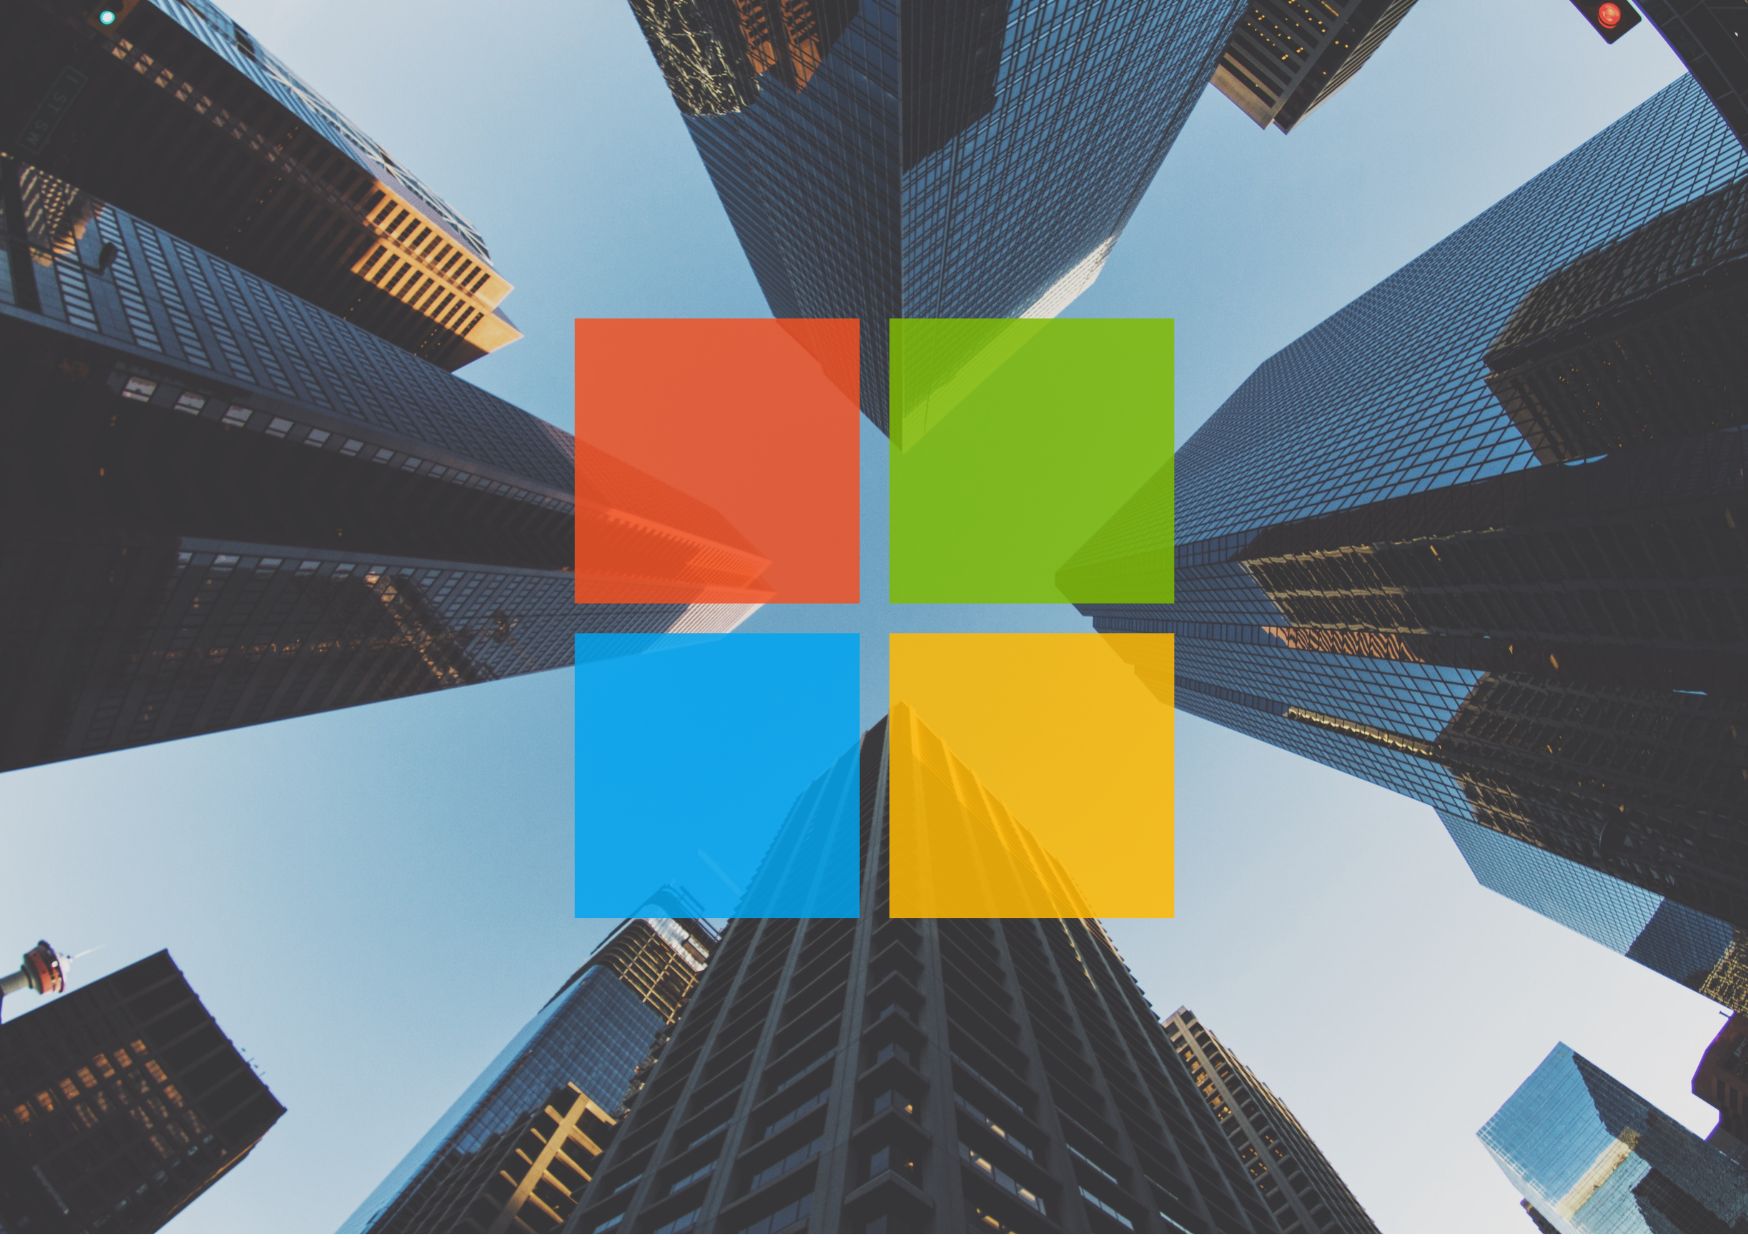 Featured image: windows logo on buildings - Windows 10 Update bricks devices